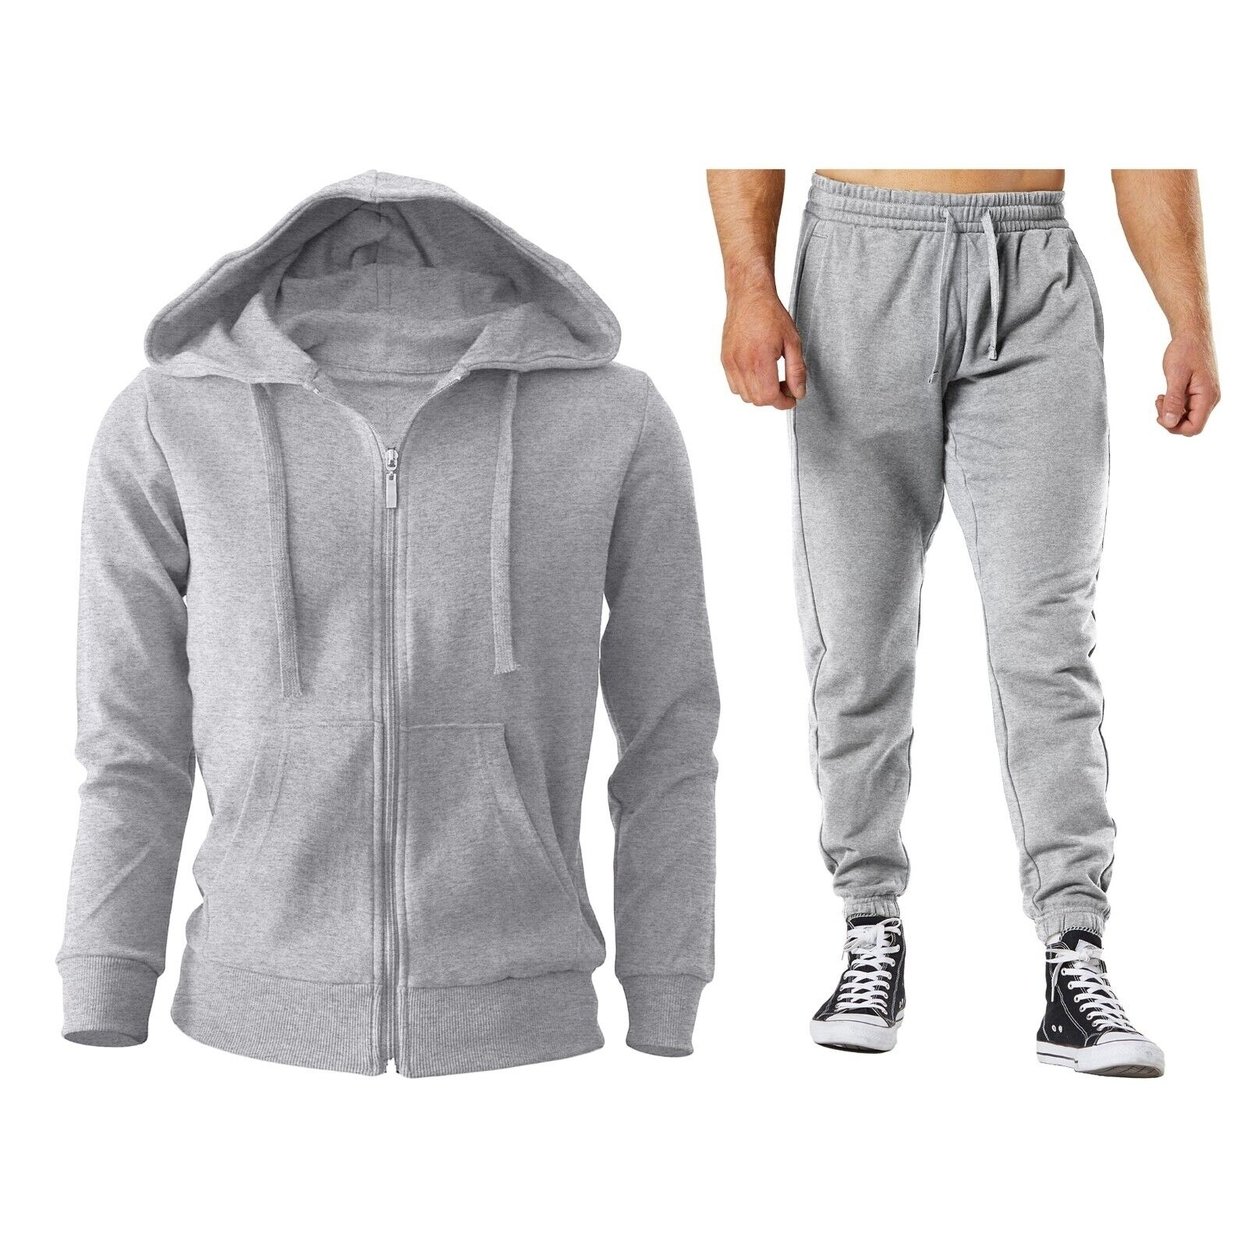 4-Piece: Men's Winter Warm Cozy Athletic Multi-Pockets BIG & TALL Sweatsuit Set - Grey, Large